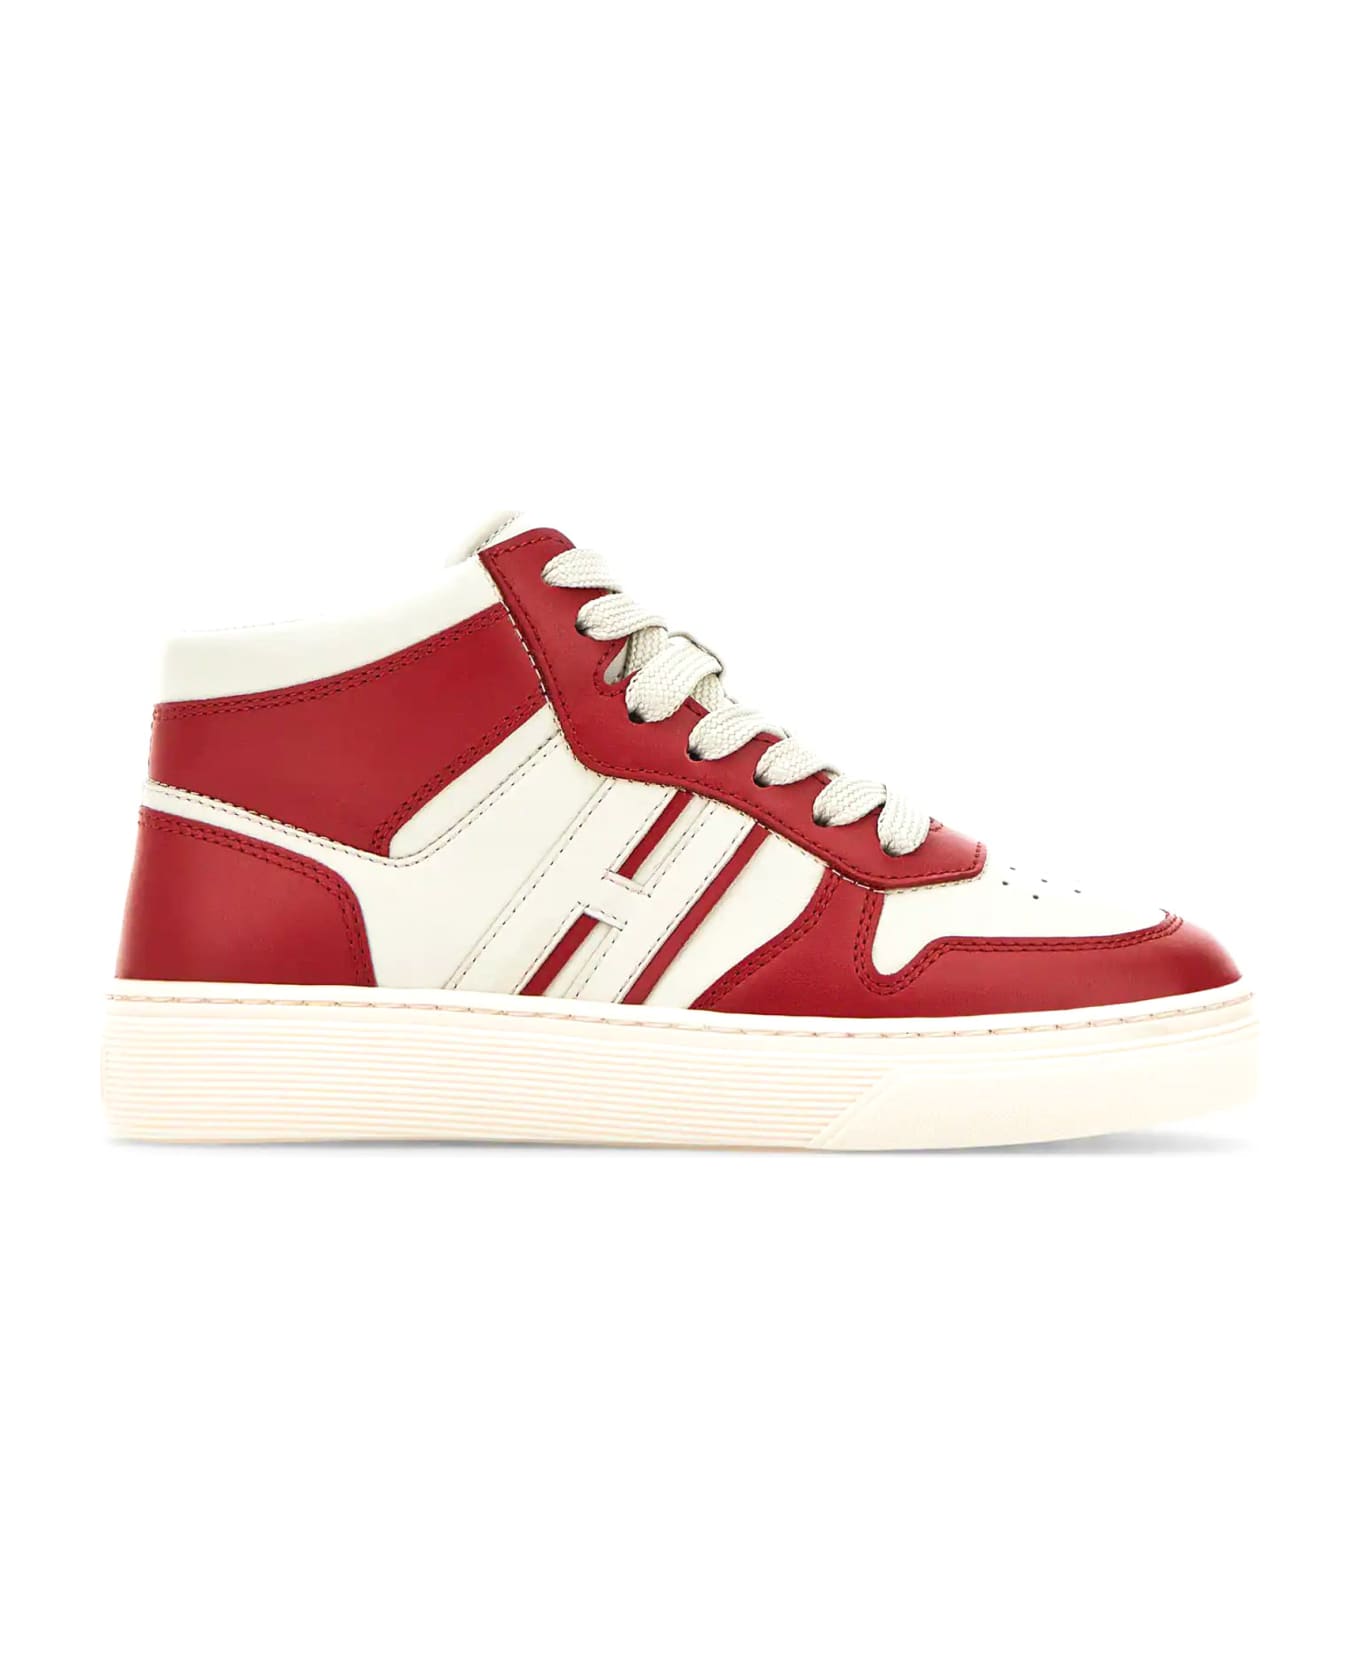 Hogan Sneakers Red - Red